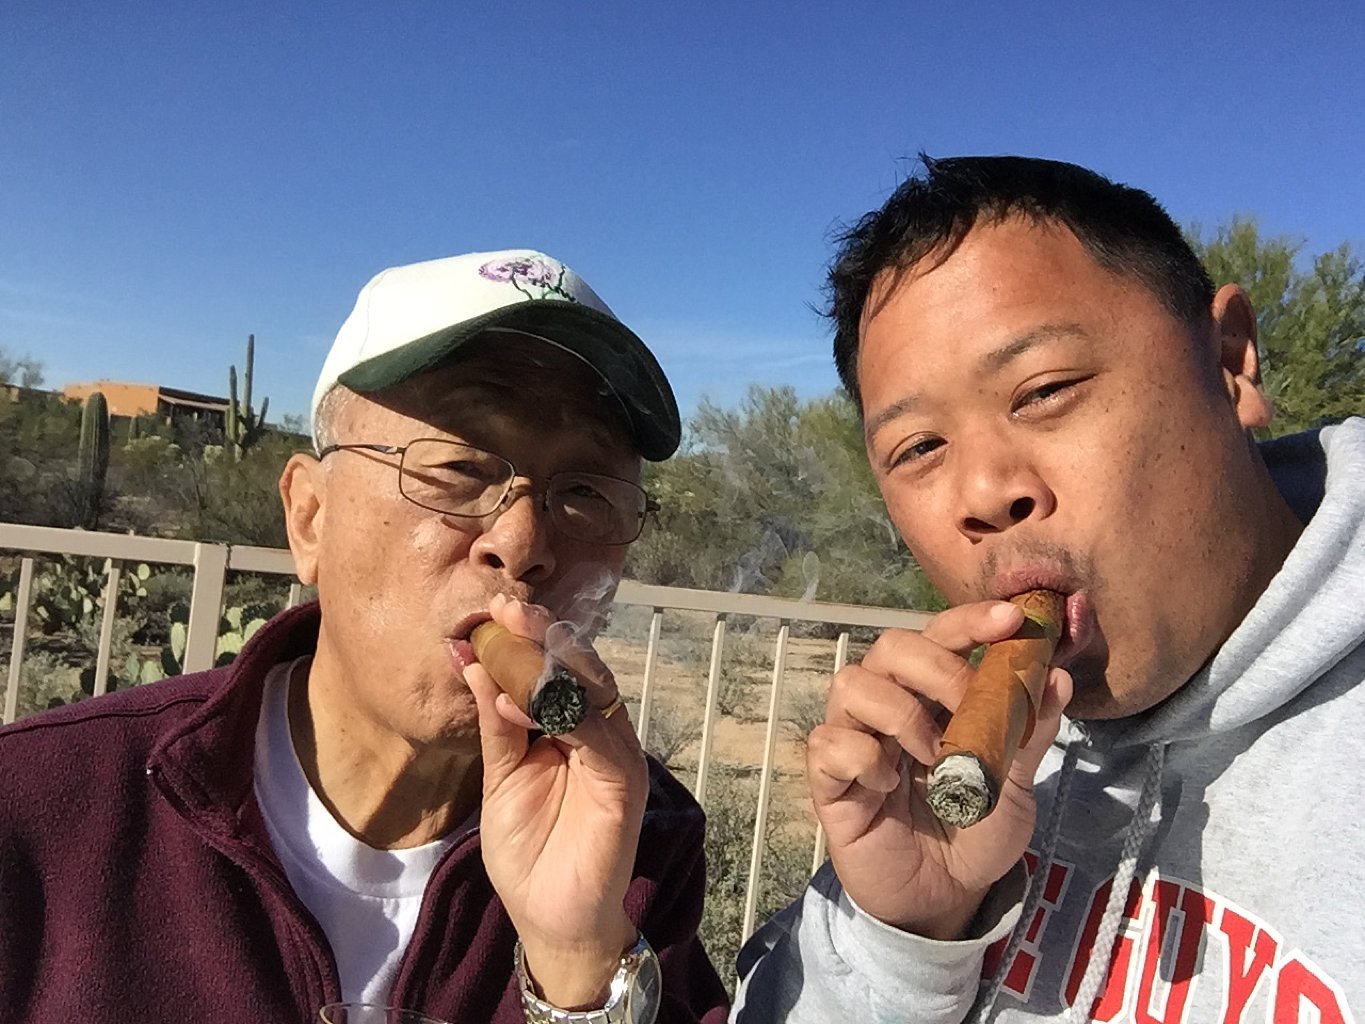 father son smoking cigars